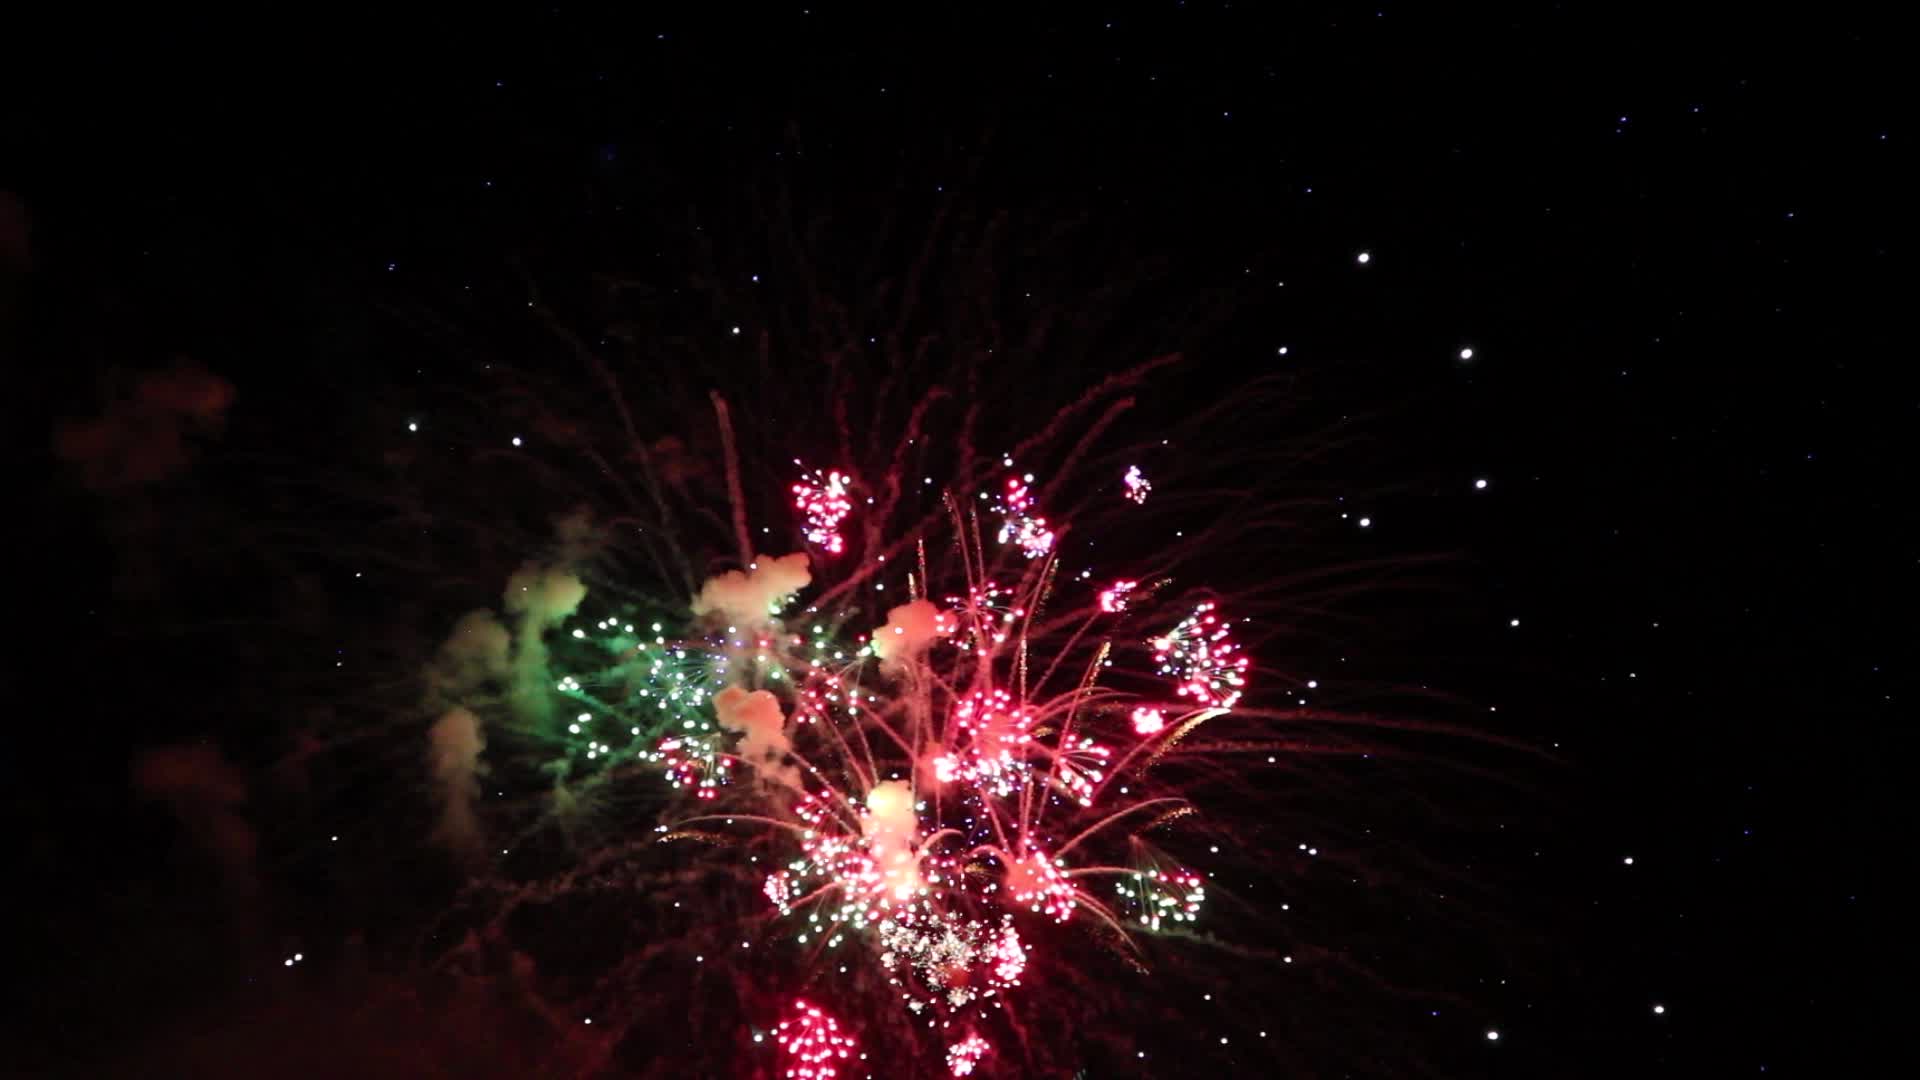 Cool Fireworks in HD